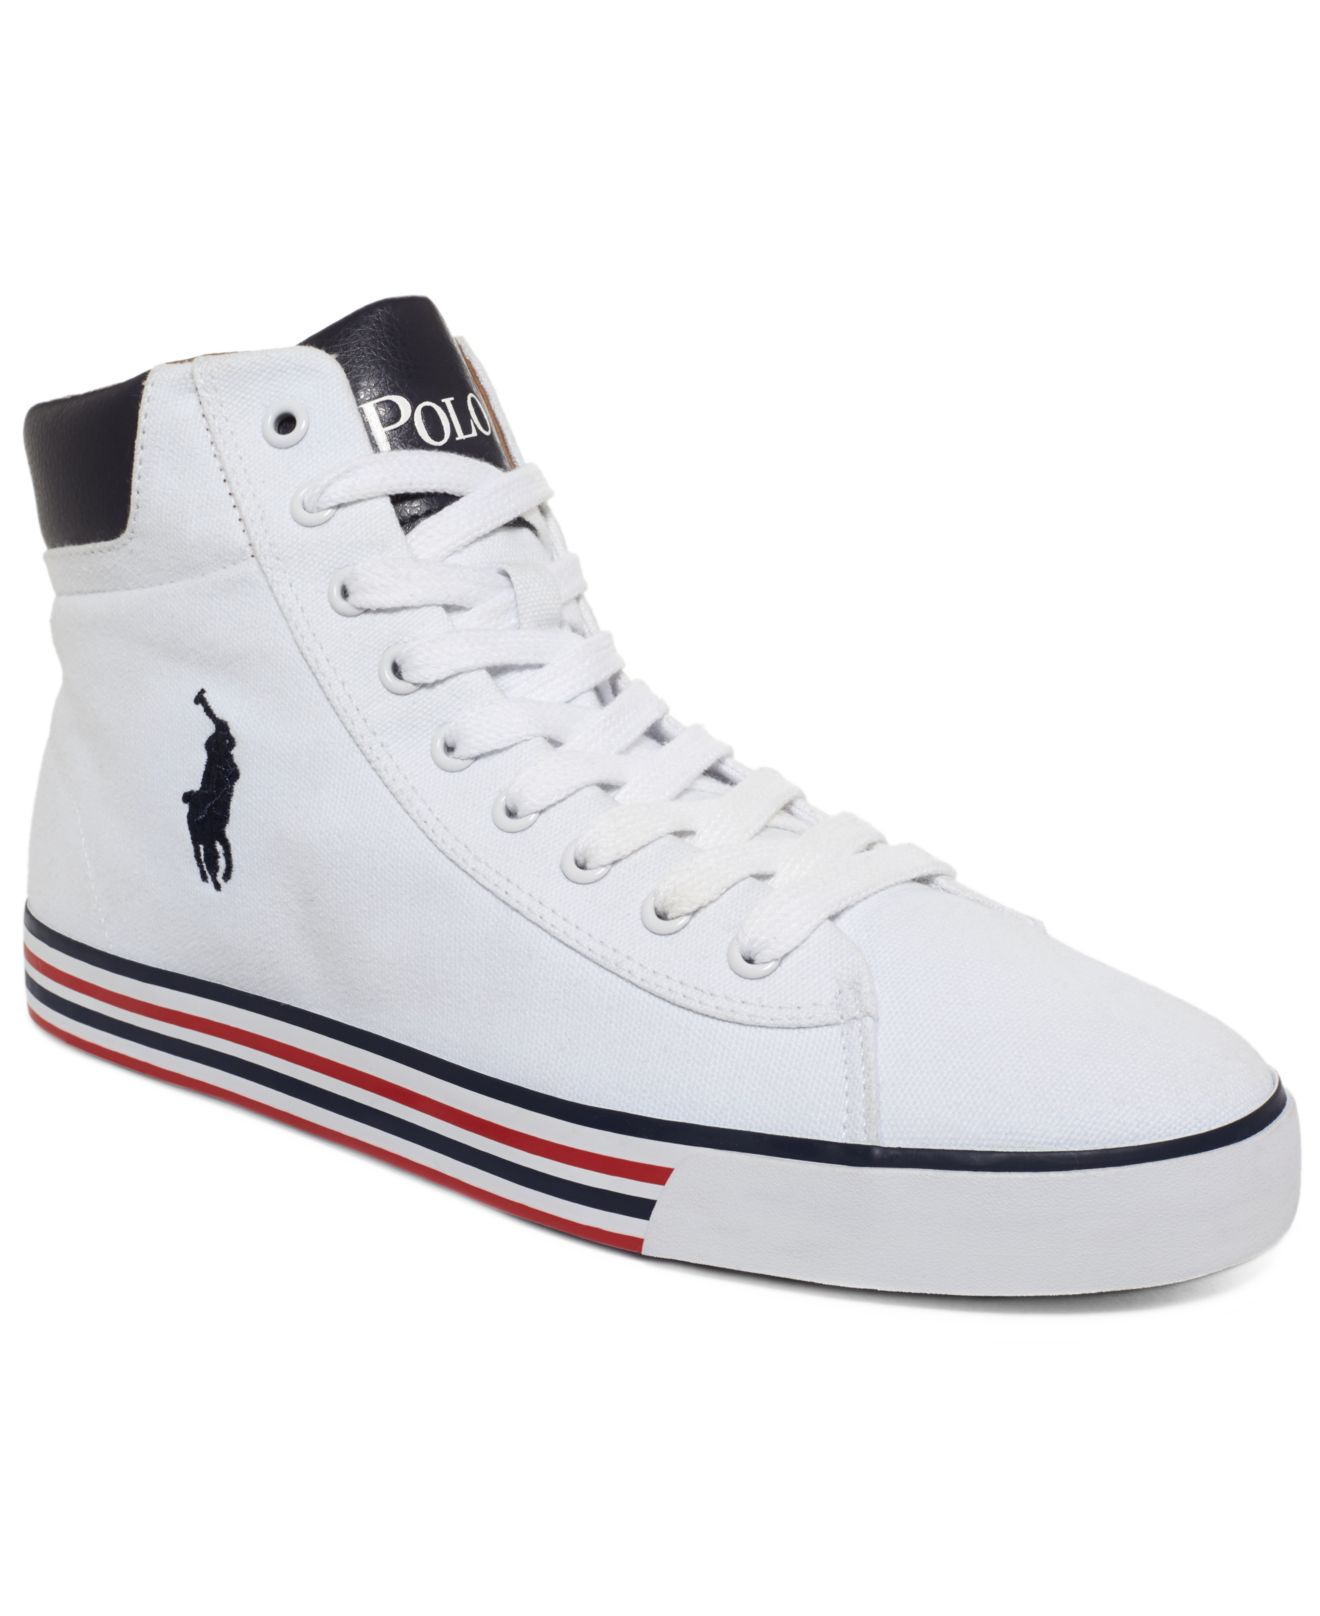 Polo Ralph Lauren Harvey Mid Top Sneakers in White for Men - Lyst